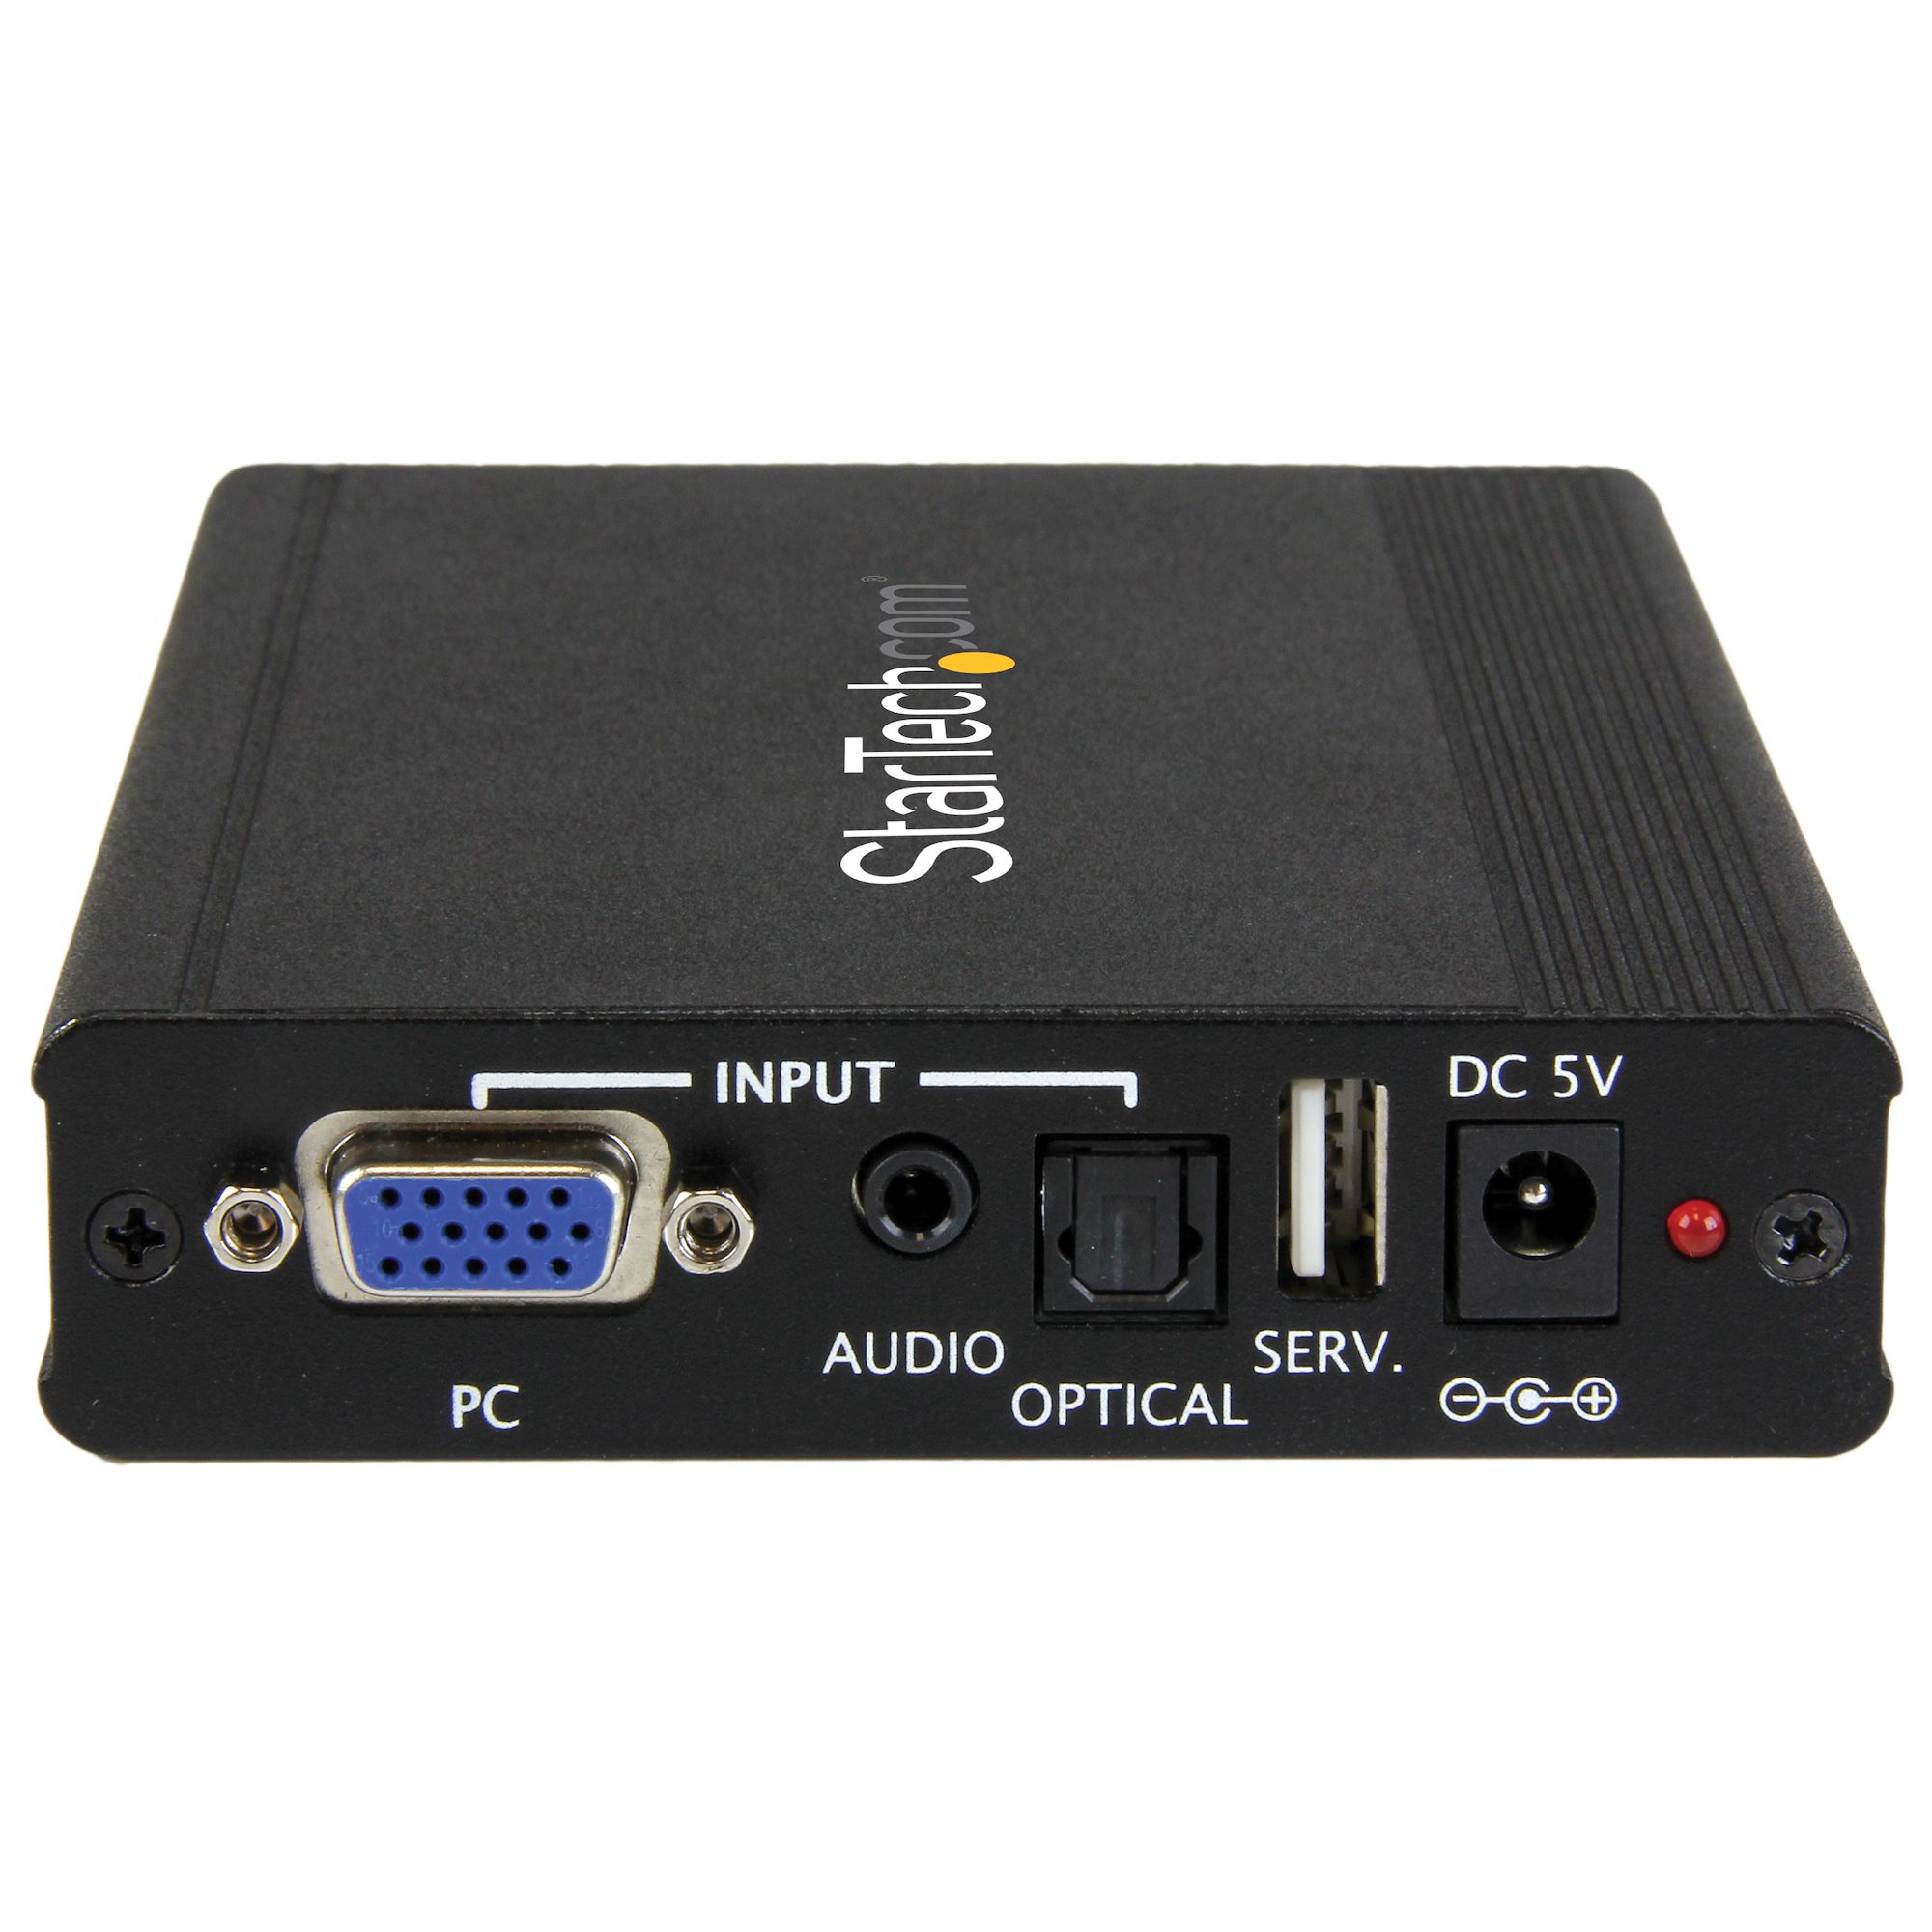 VGA - HDMIアップスキャンコンバーター/ビデオ映像スケーラー/変換器アダプタ 1920x1200対応